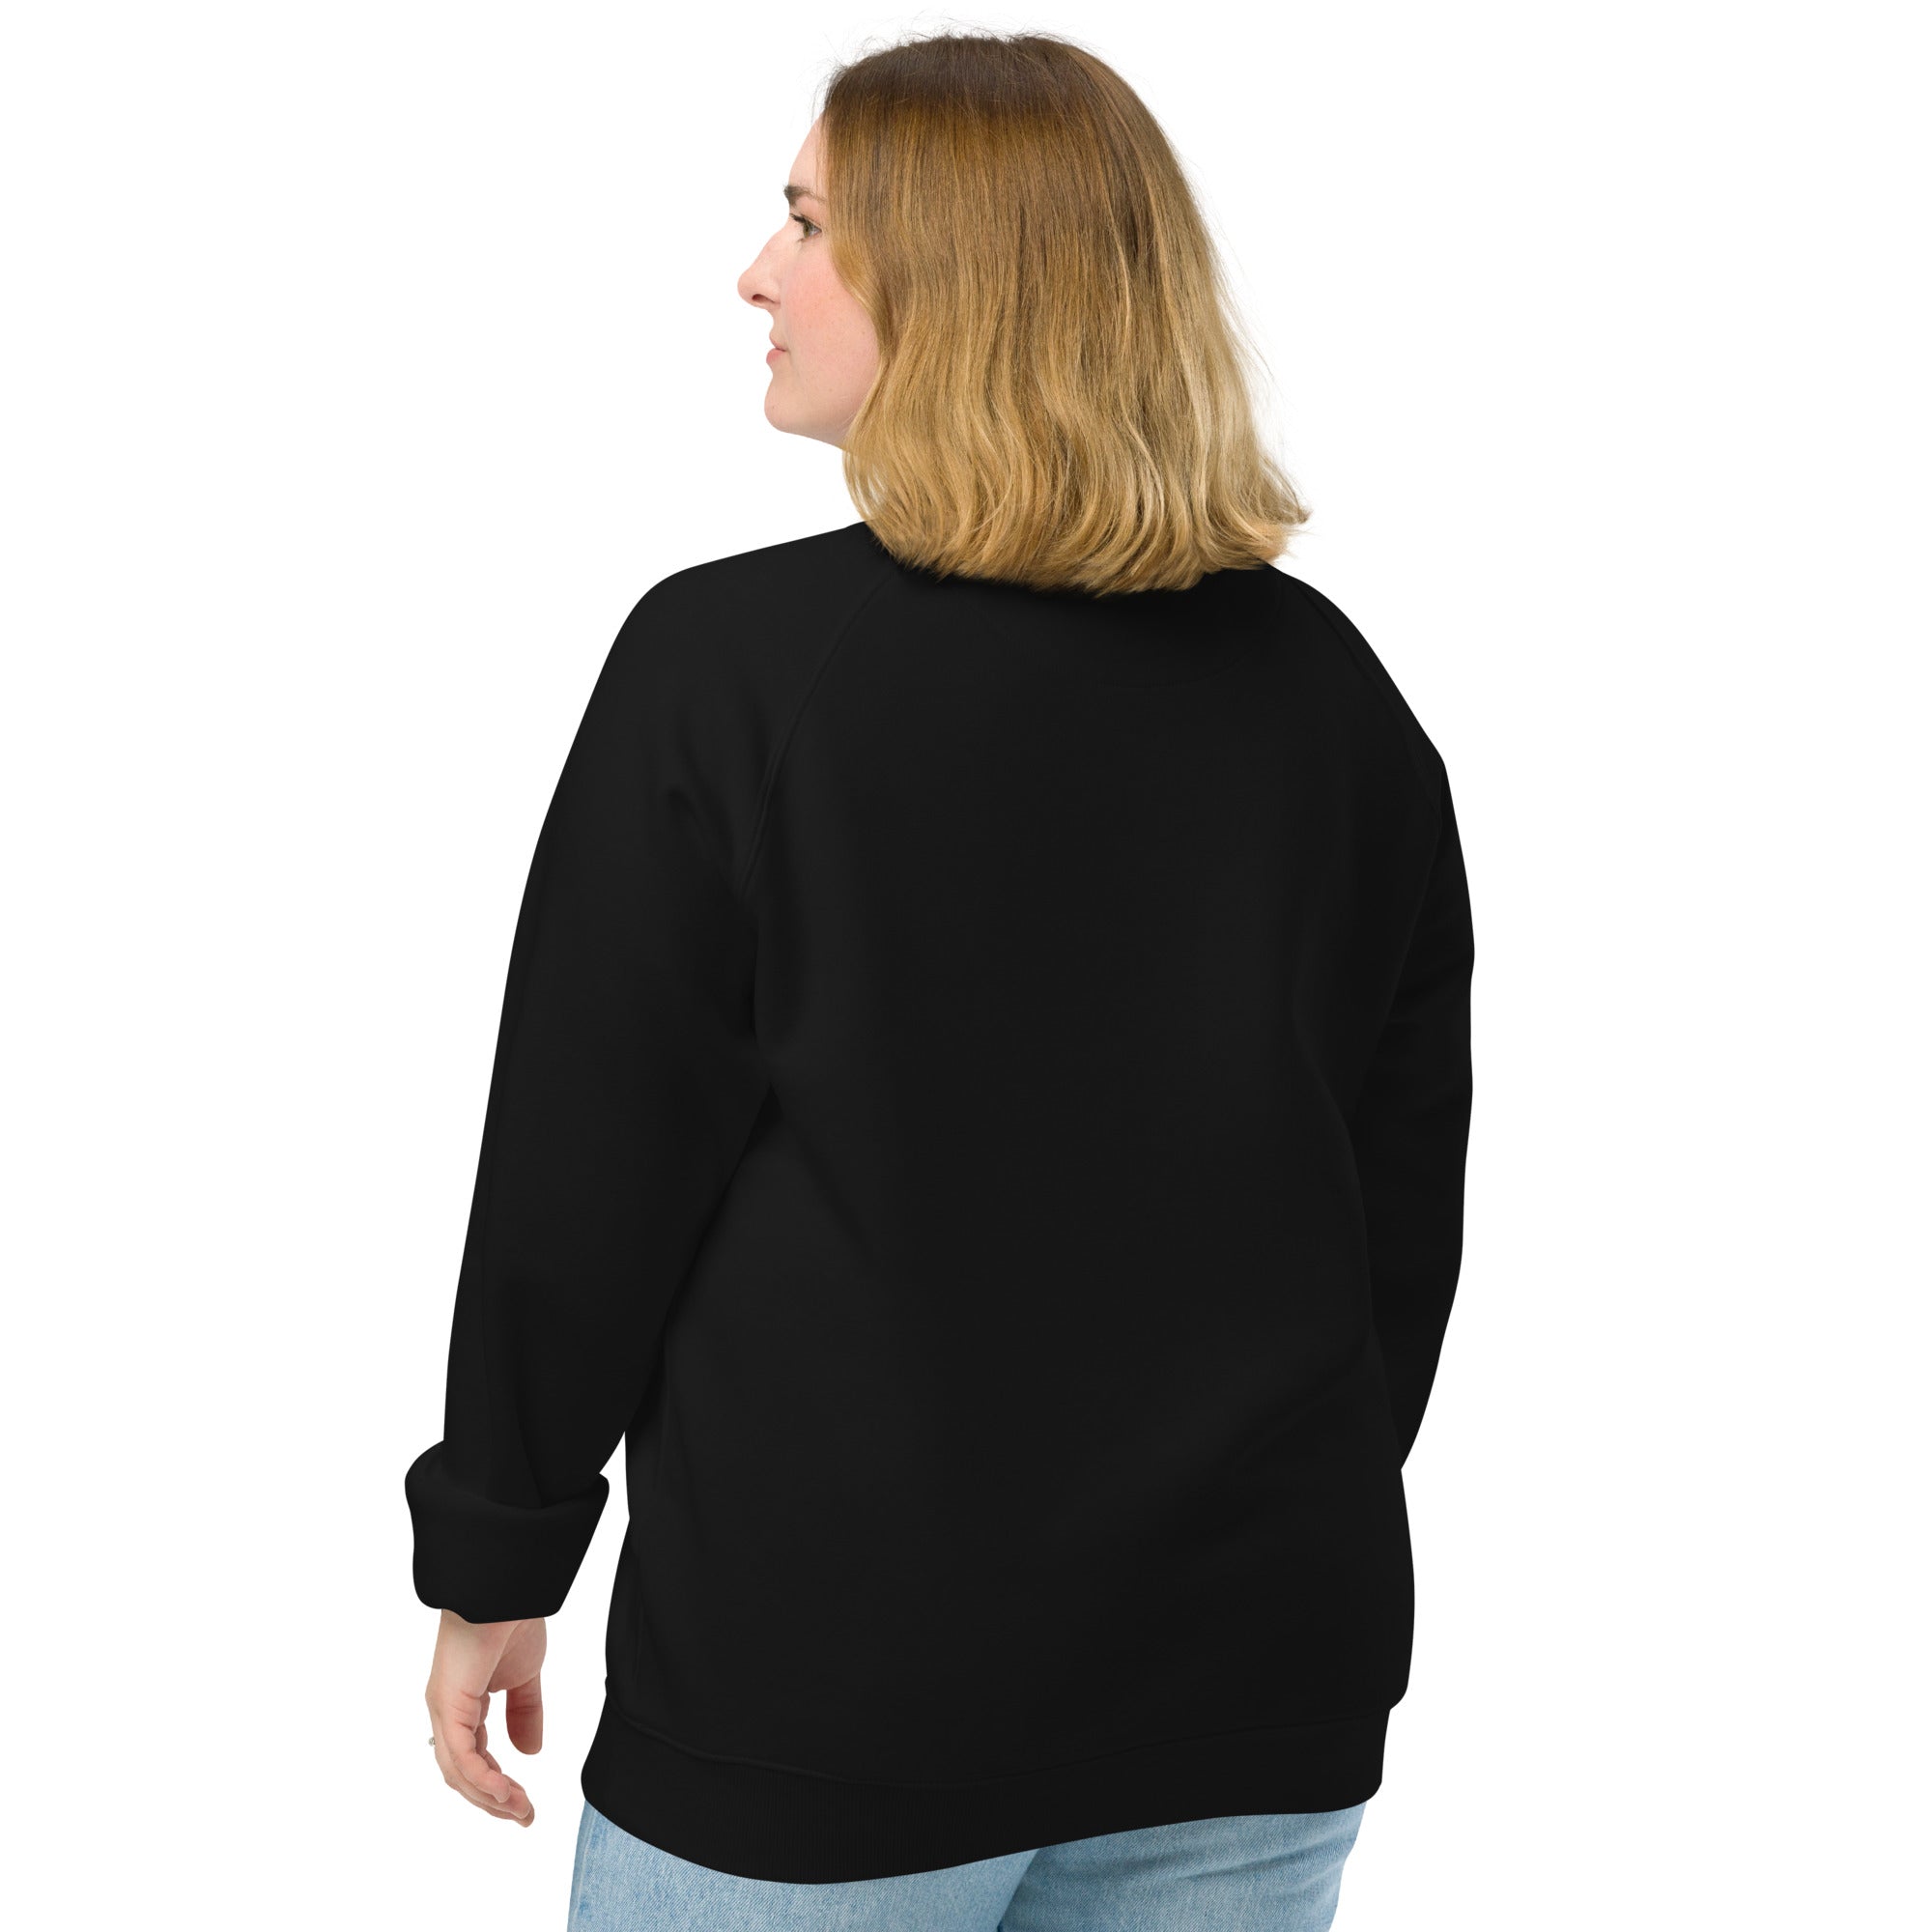 Scottsdale Logo W - Black Unisex organic raglan sweatshirt